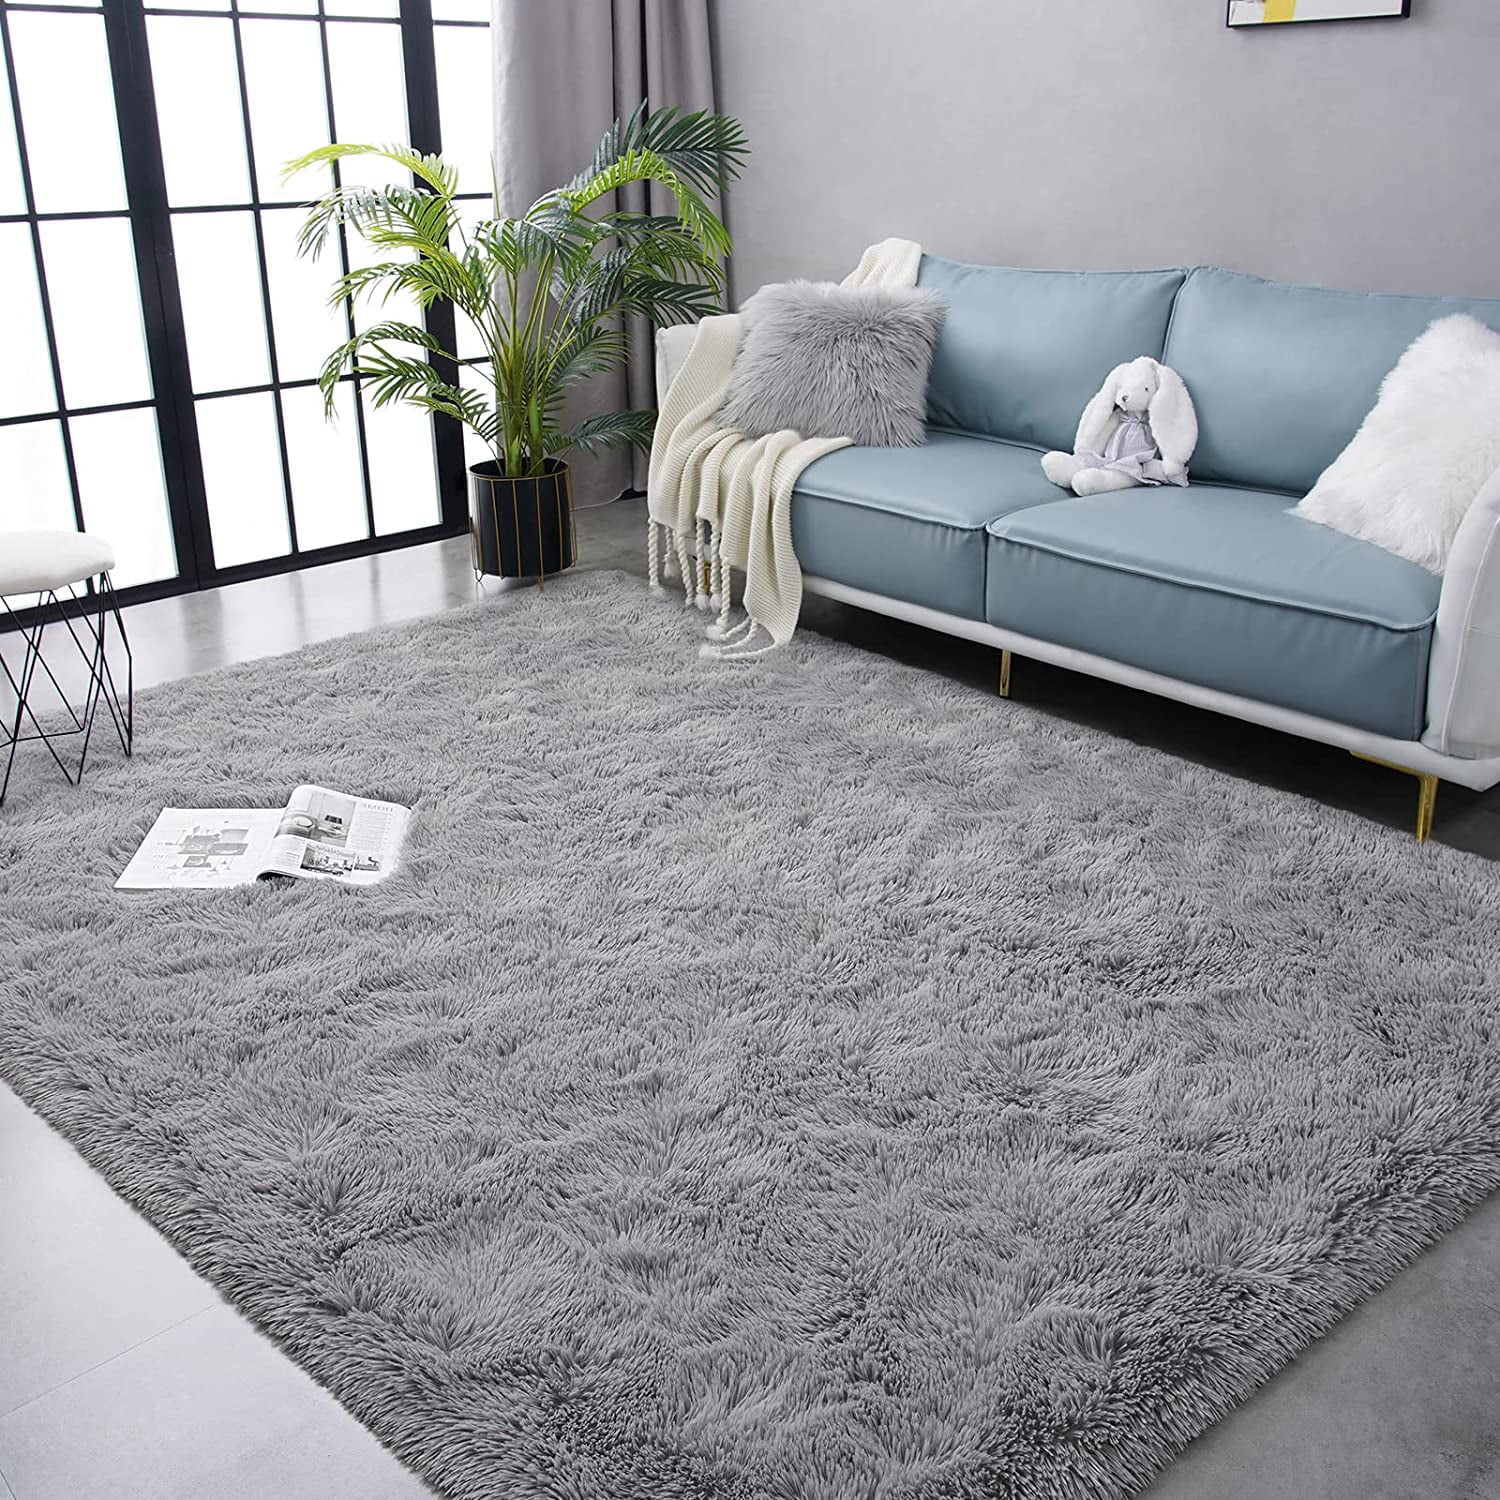 TWINNIS Luxury Fluffy Rugs Ultra Soft Shag Rug Carpet for Bedroom